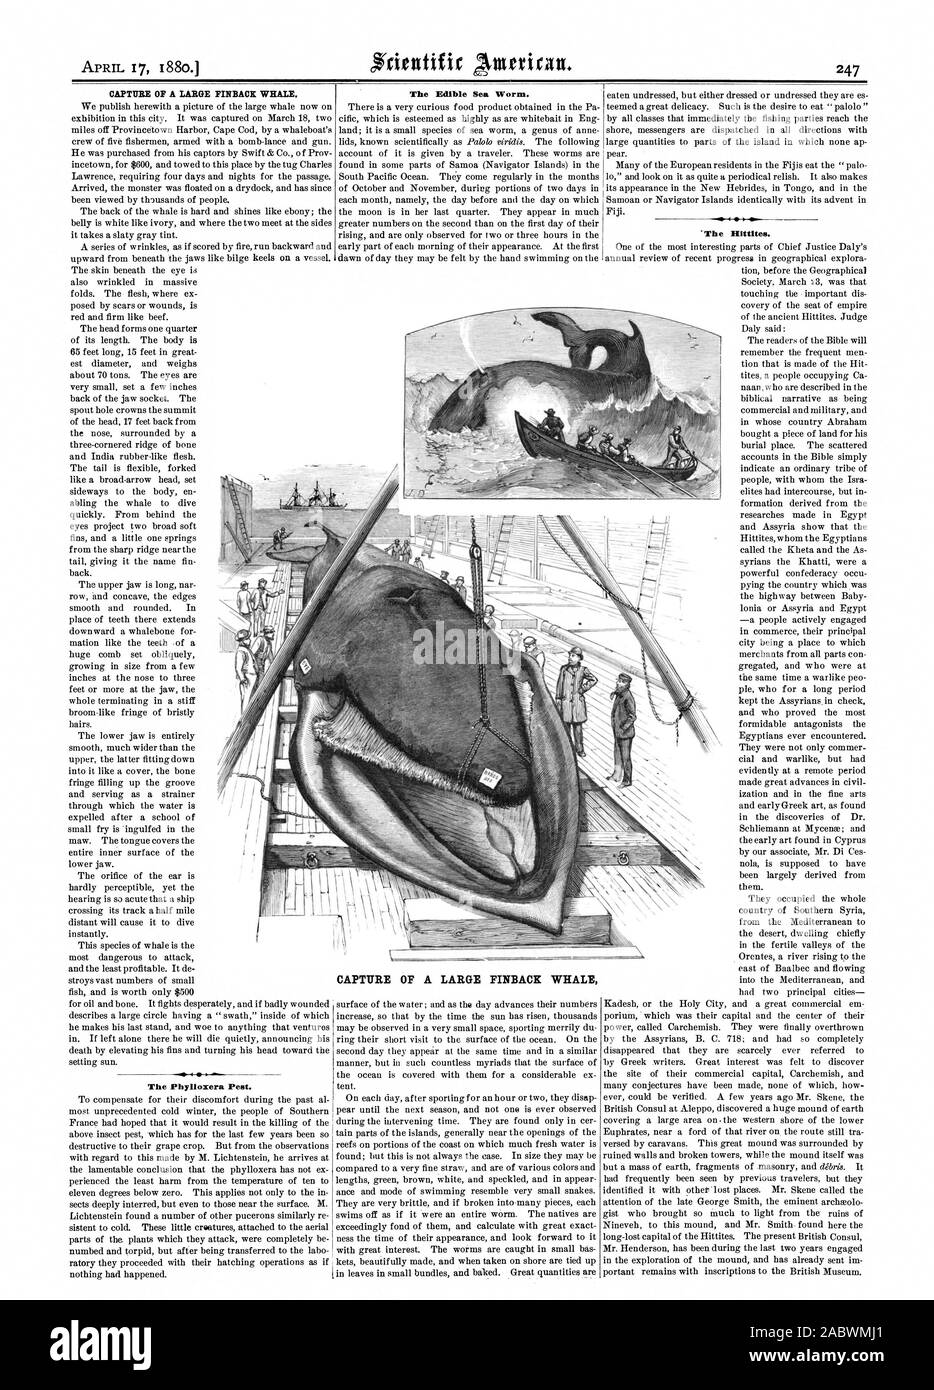 OP cattura una grande balena PINBACIE. La fillossera Pest. Cattura di una grande balena FINEACK Ittiti., Scientific American, 1880-04-17 Foto Stock